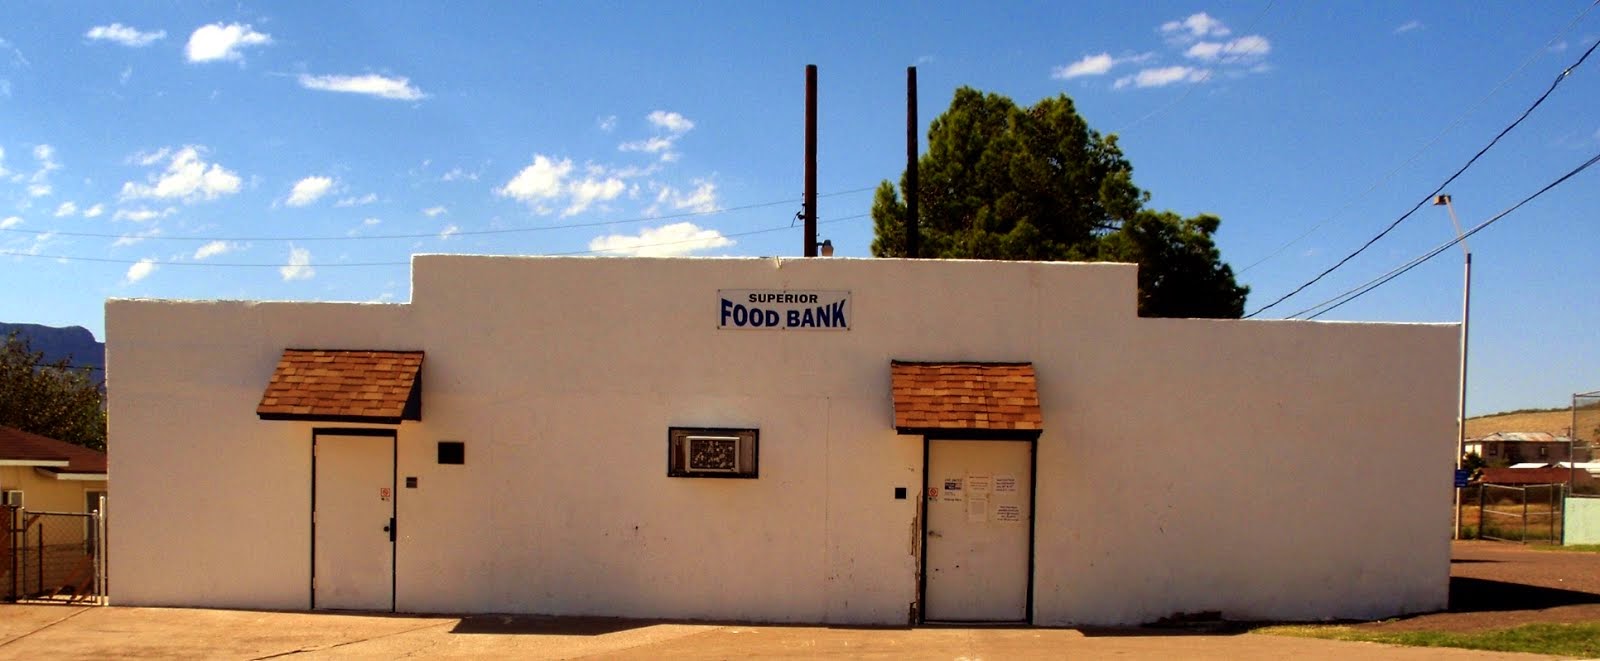 Superior Food Bank